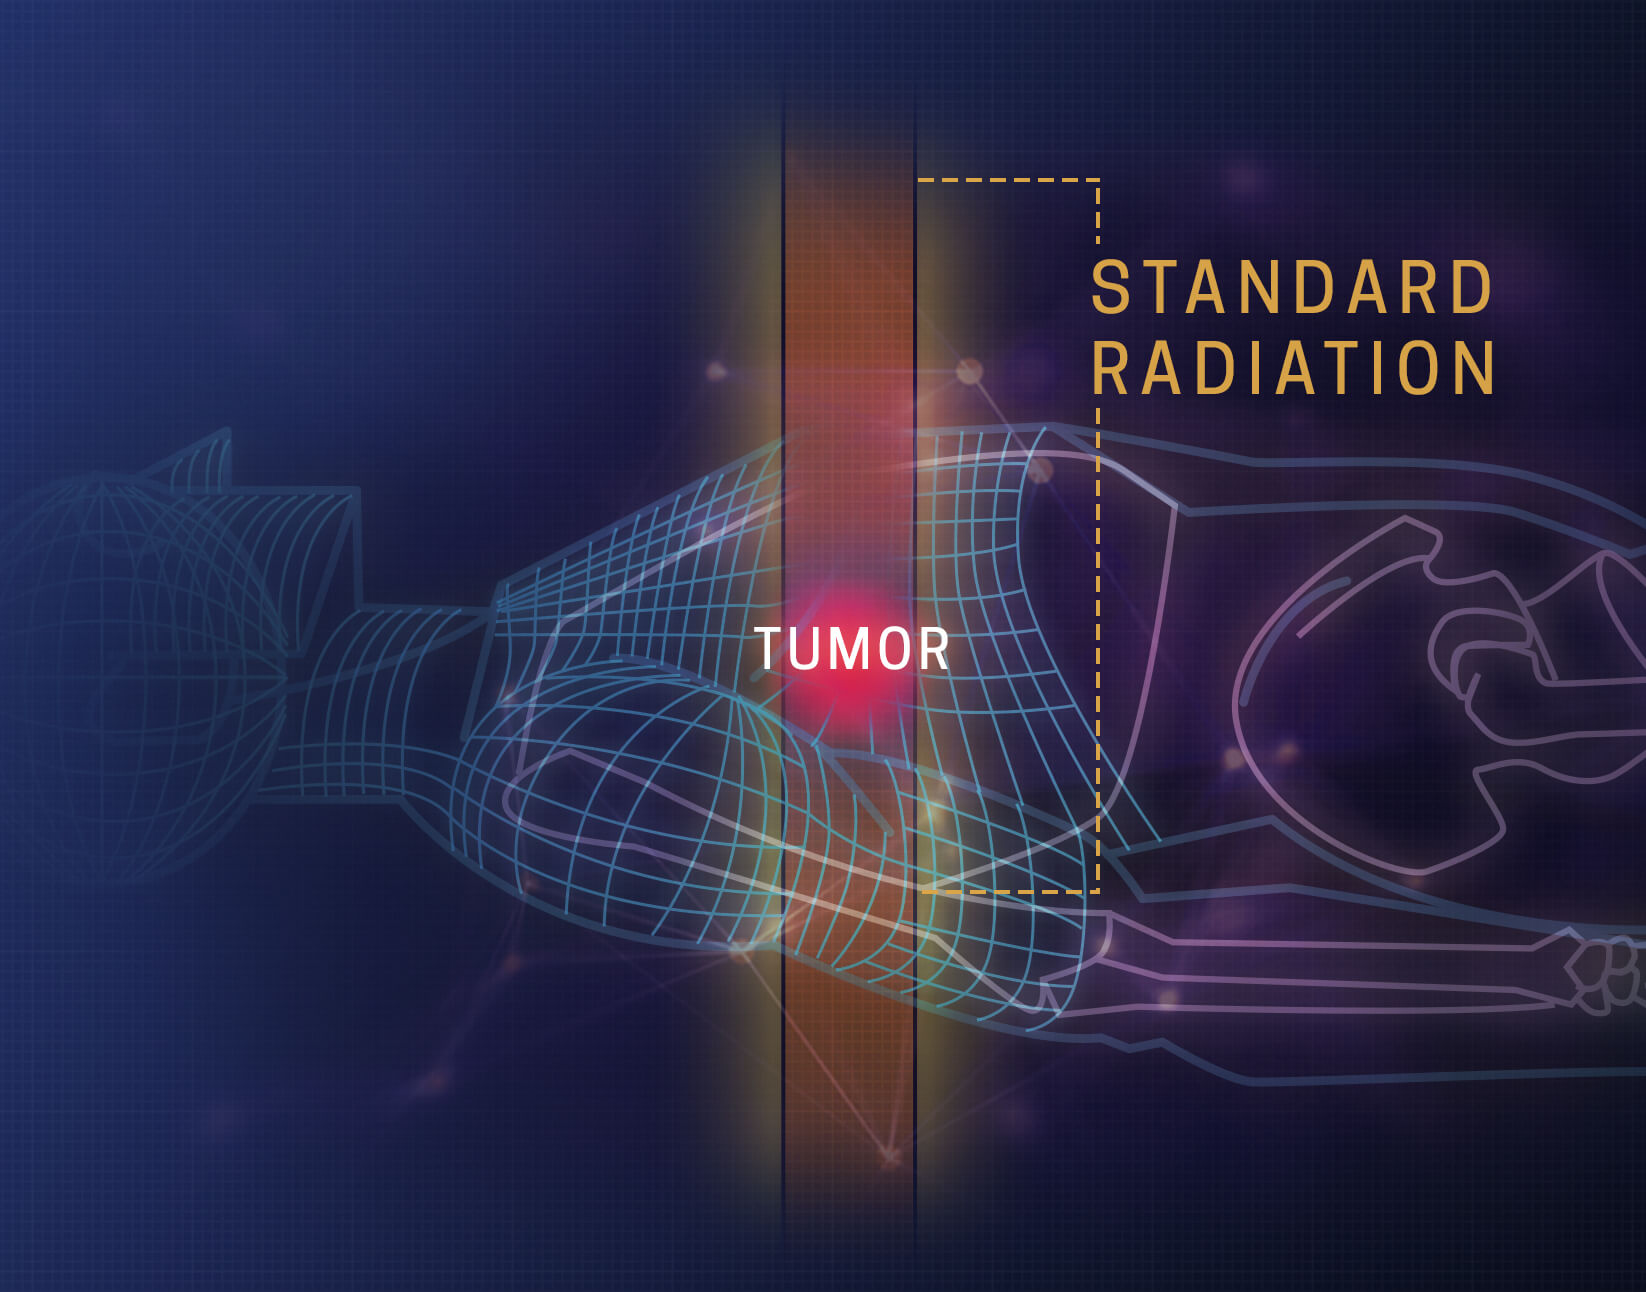 Proton Therapy vs. Standard Radiation